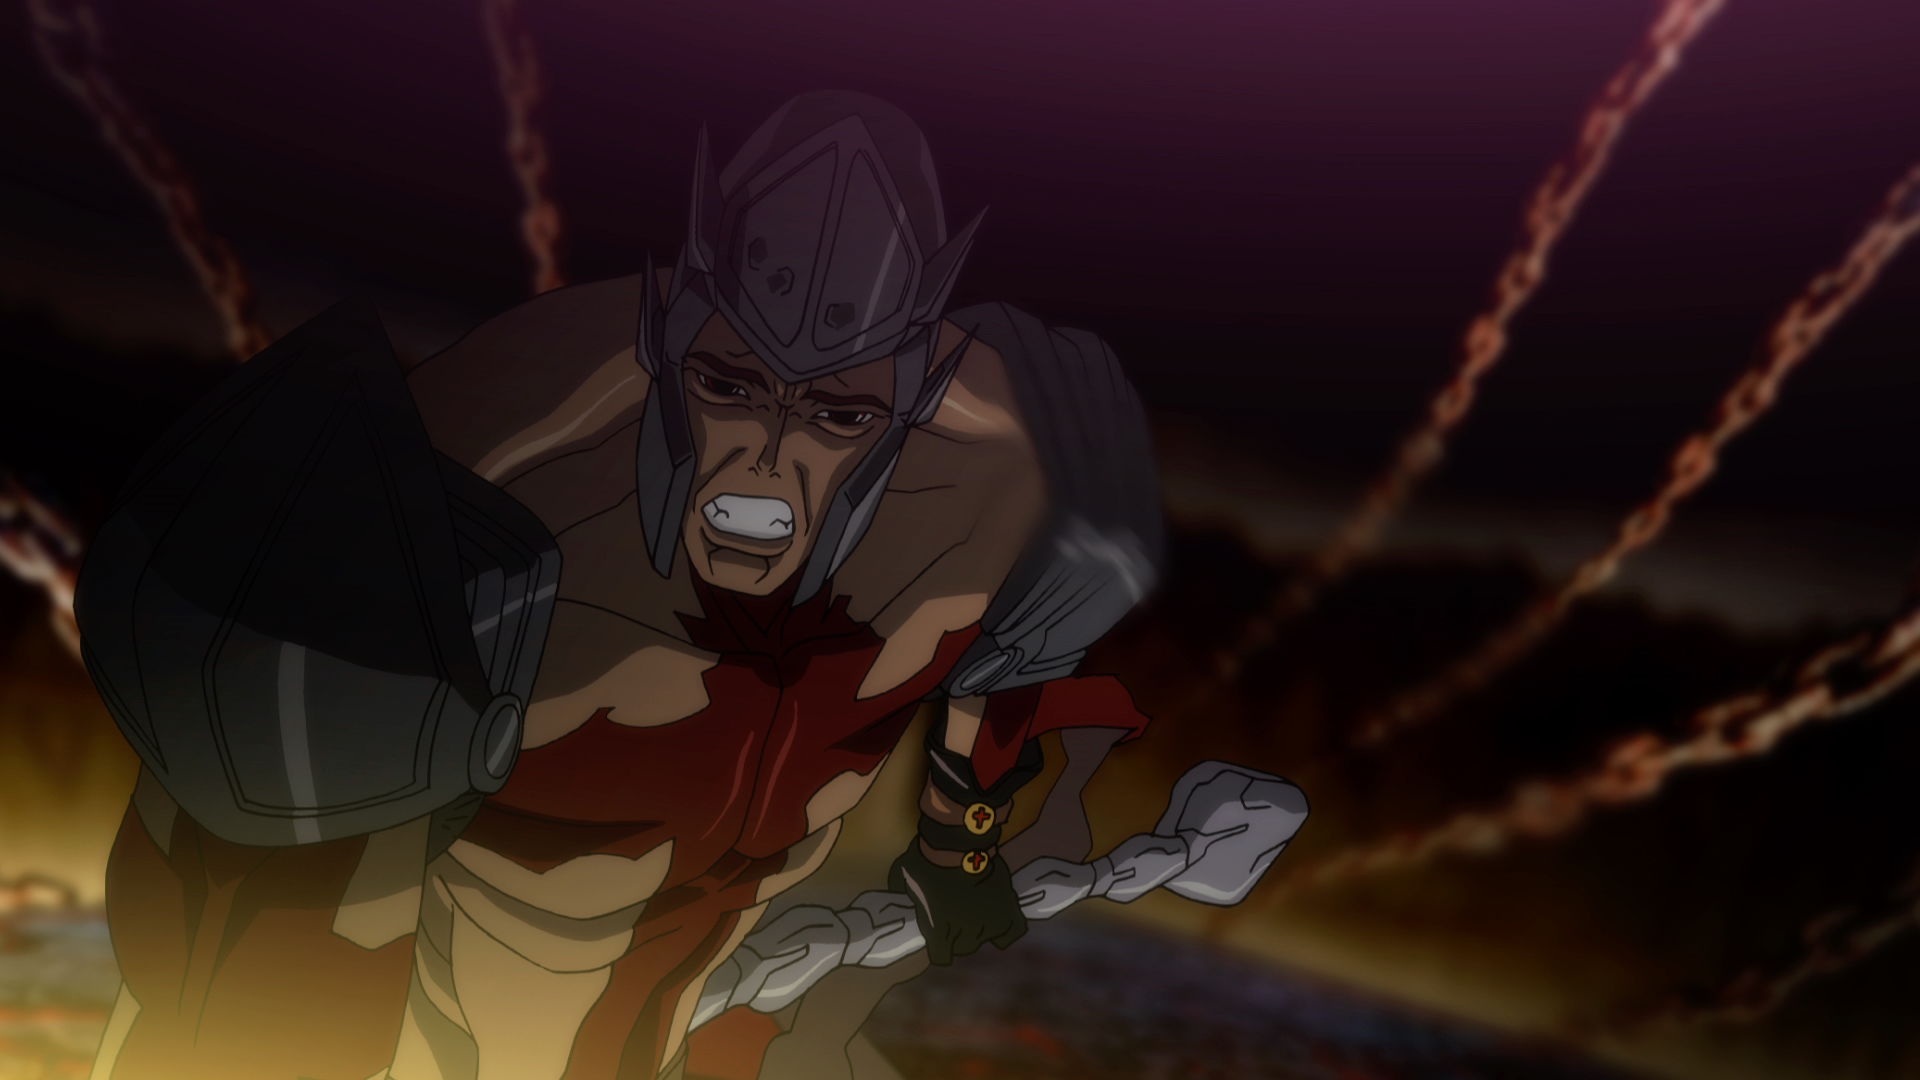 Dante's Inferno: An Animated Epic Screenshots · SteamDB